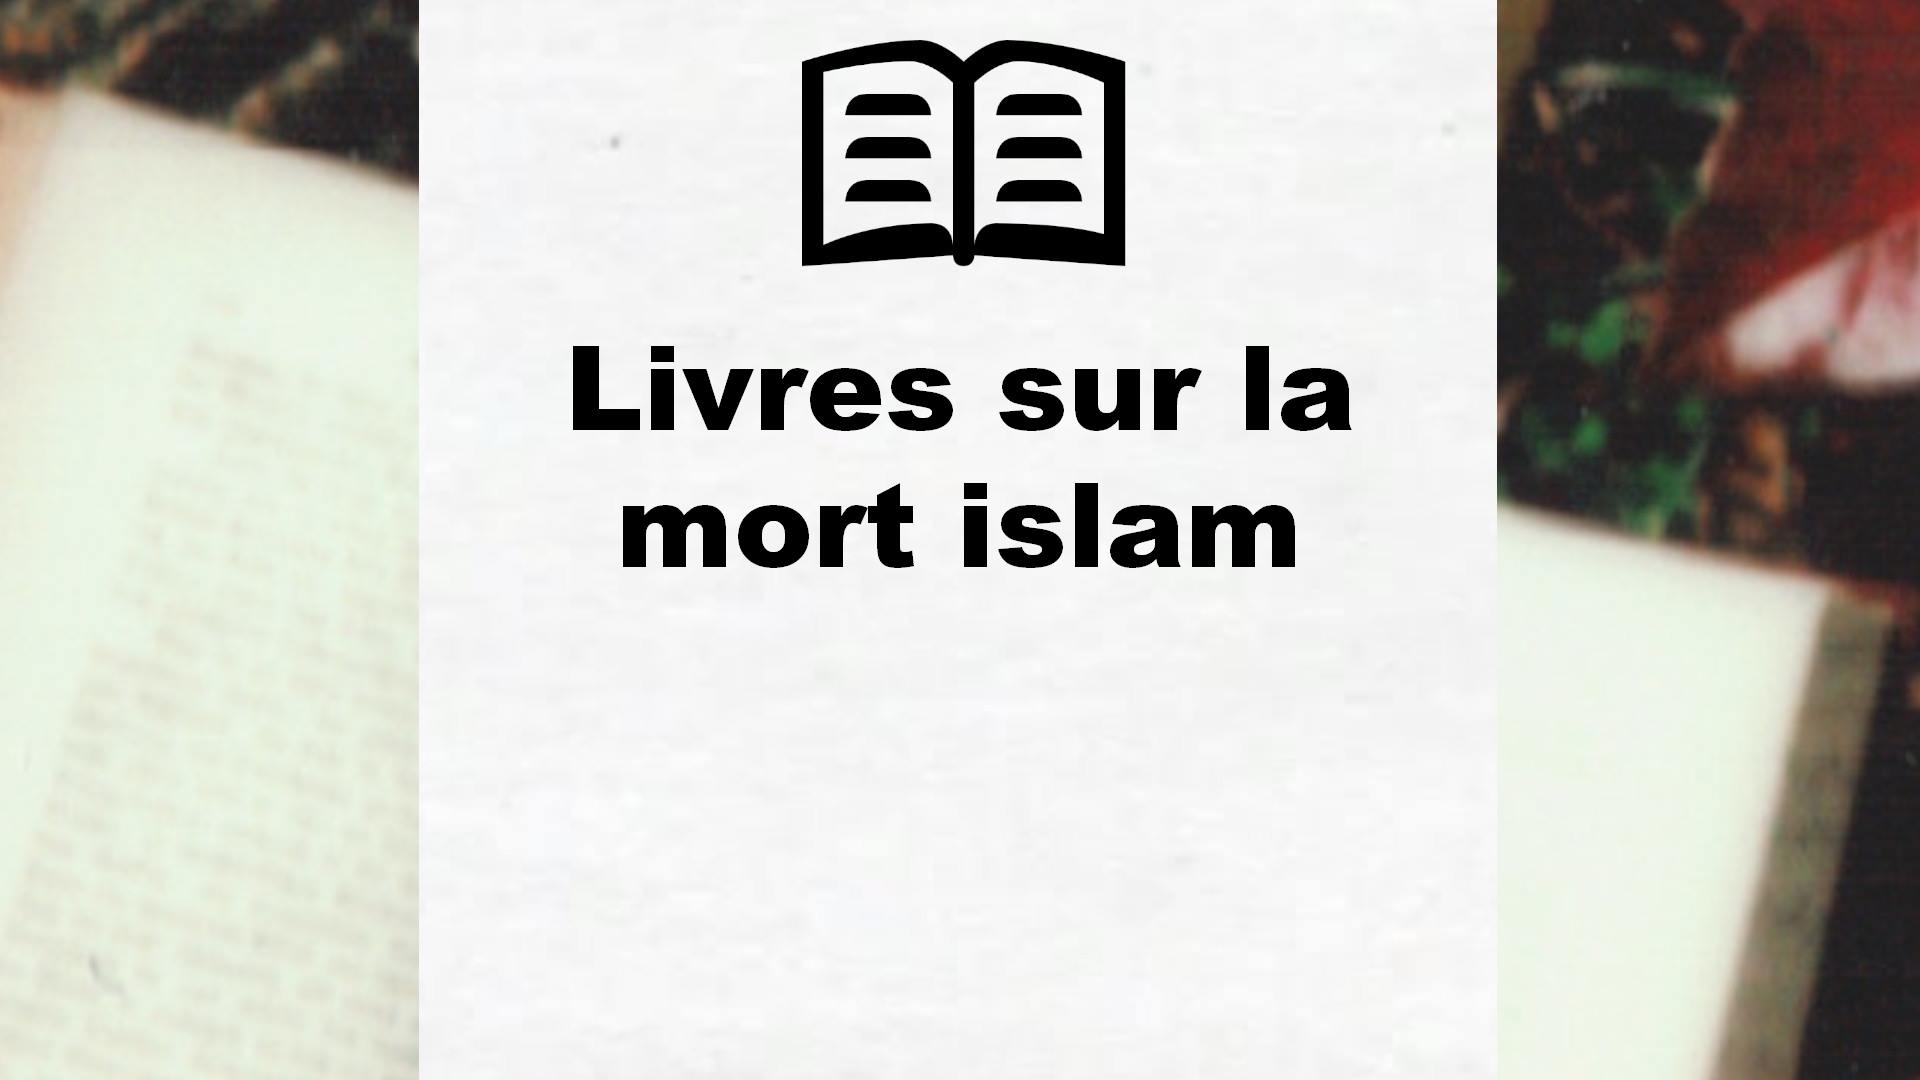 Livres sur la mort islam